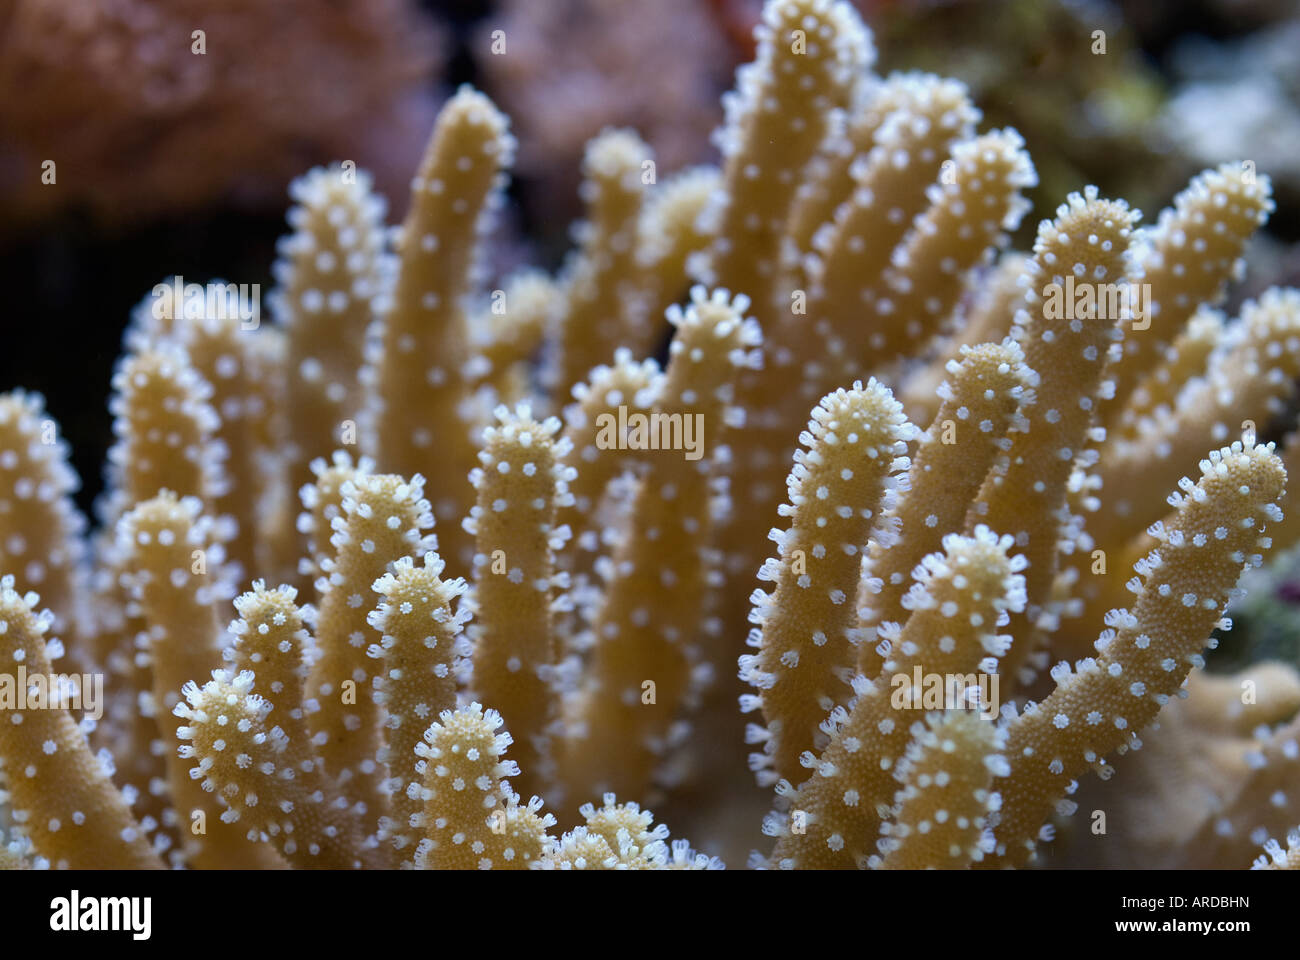 Lobophytum pauciflorum leather coral reef Stock Photo - Alamy